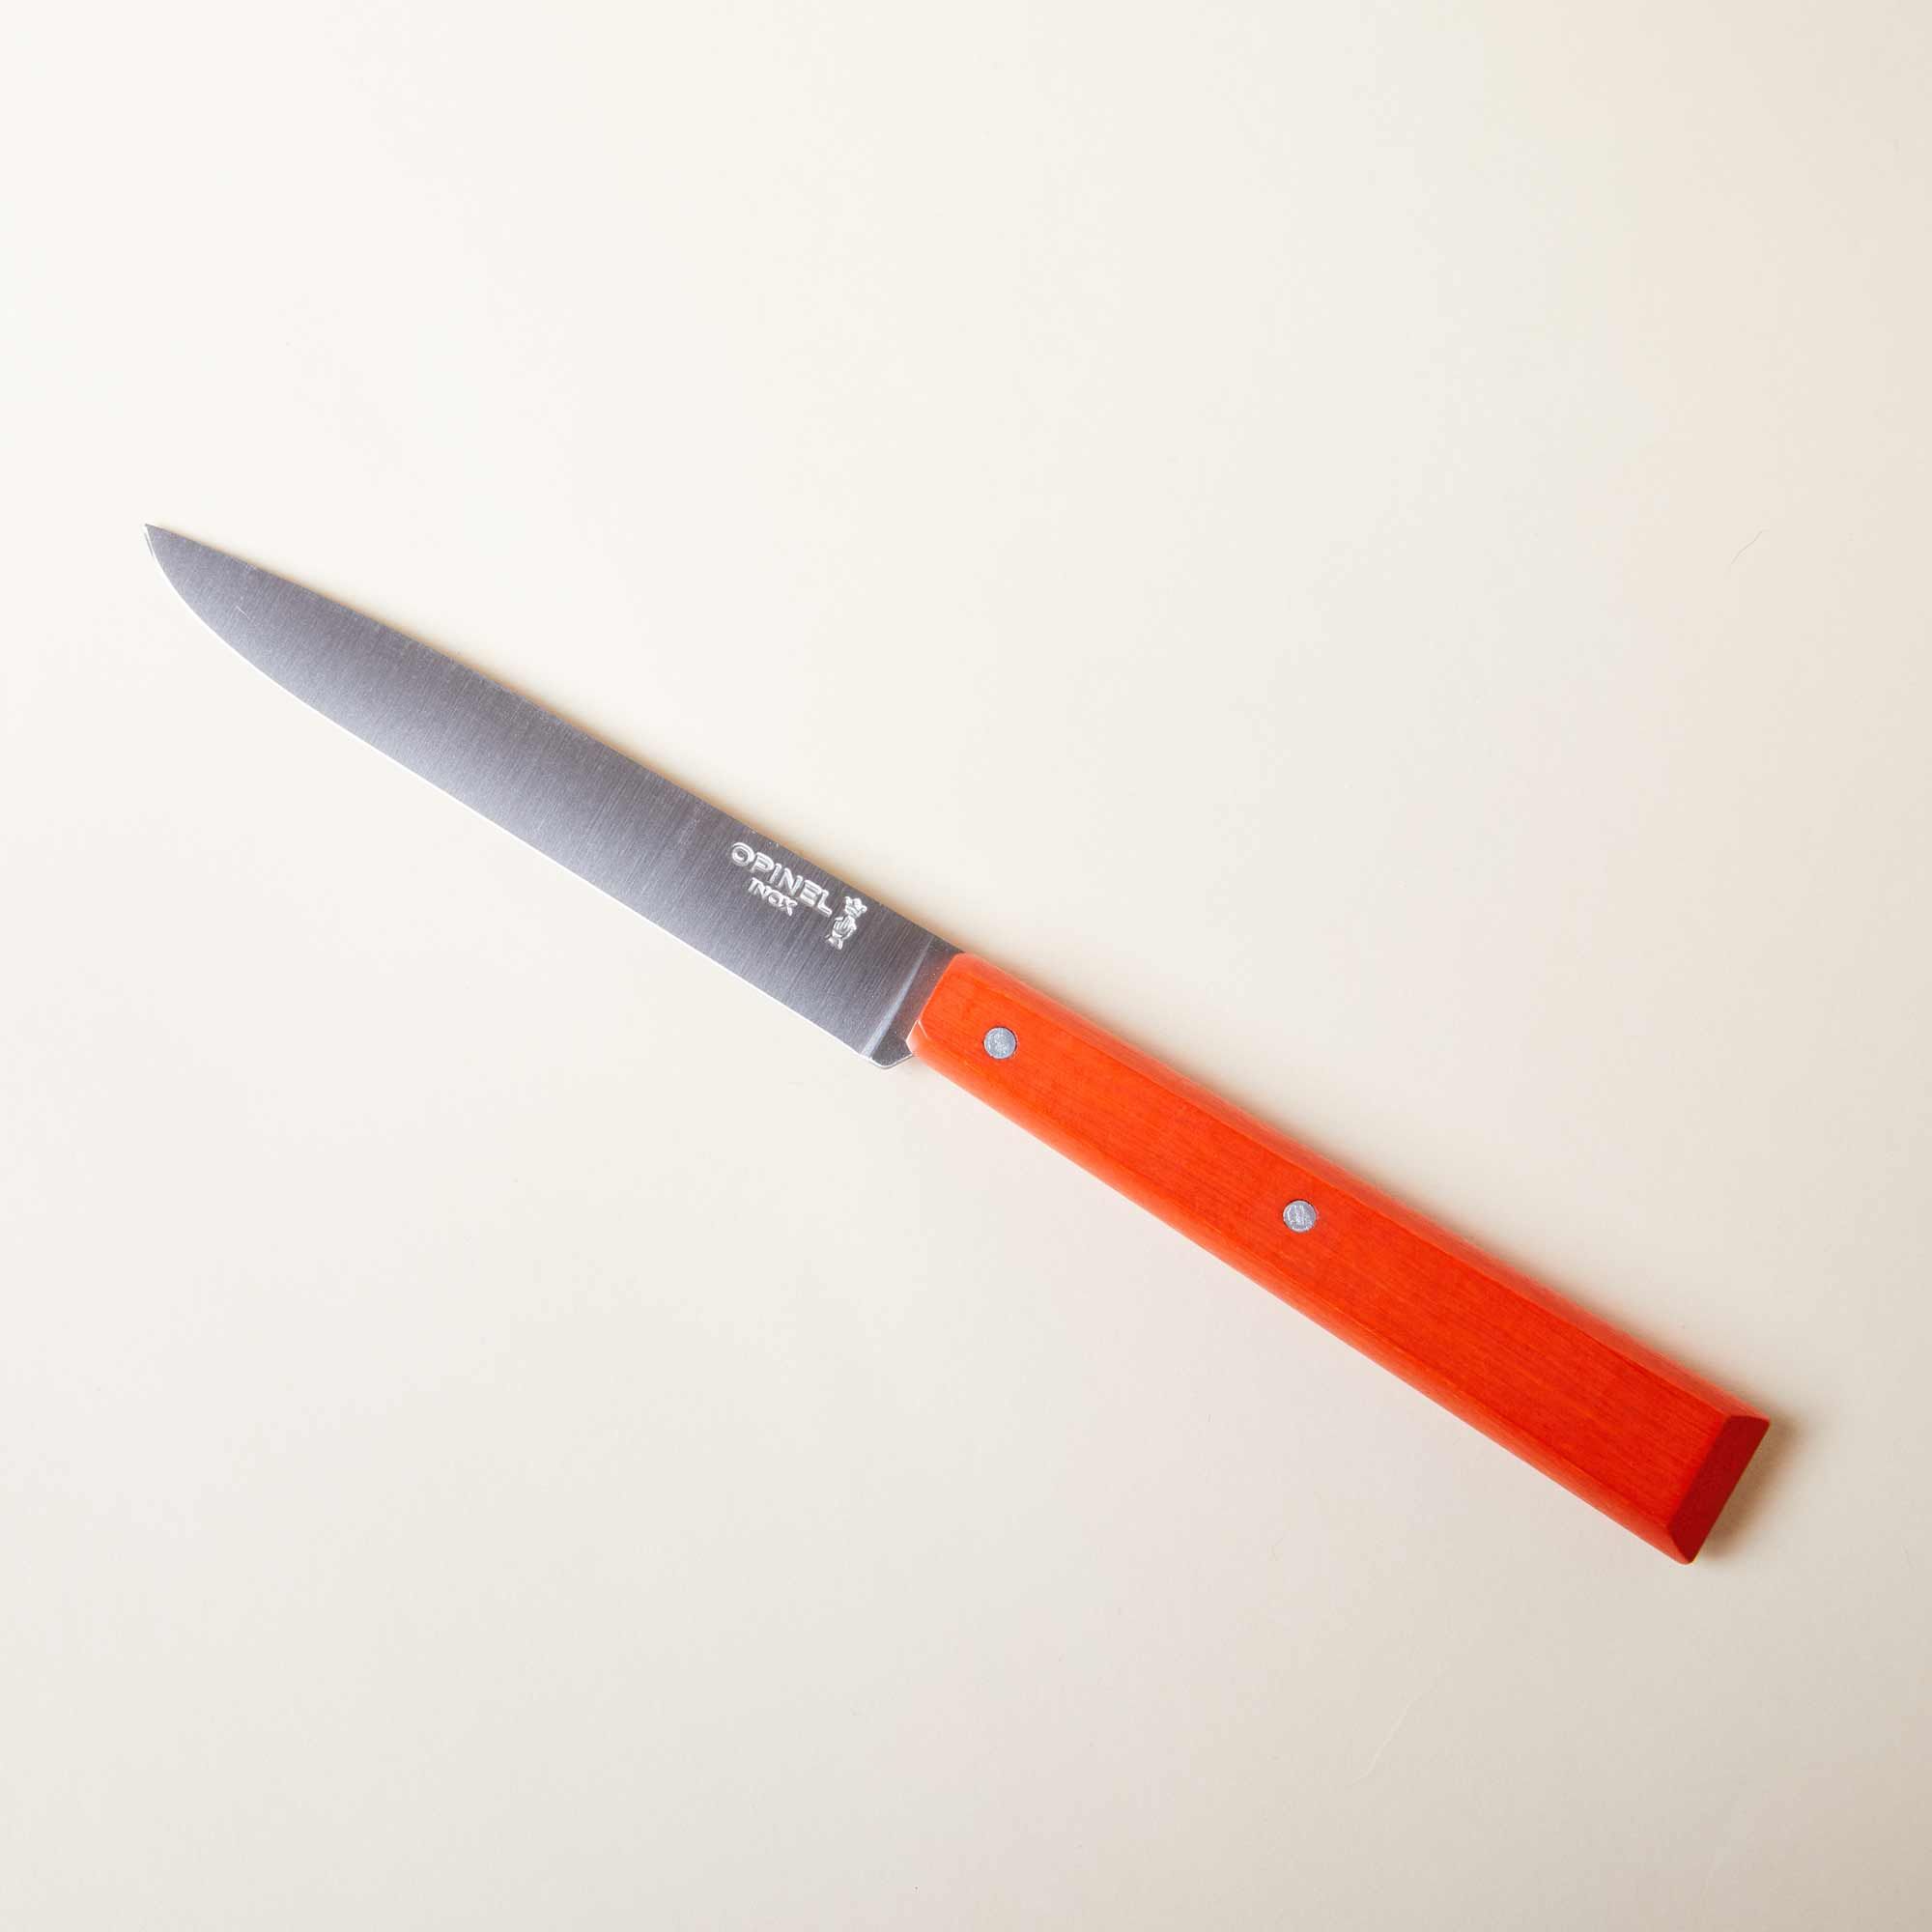 A steak knife with a bold orange handle